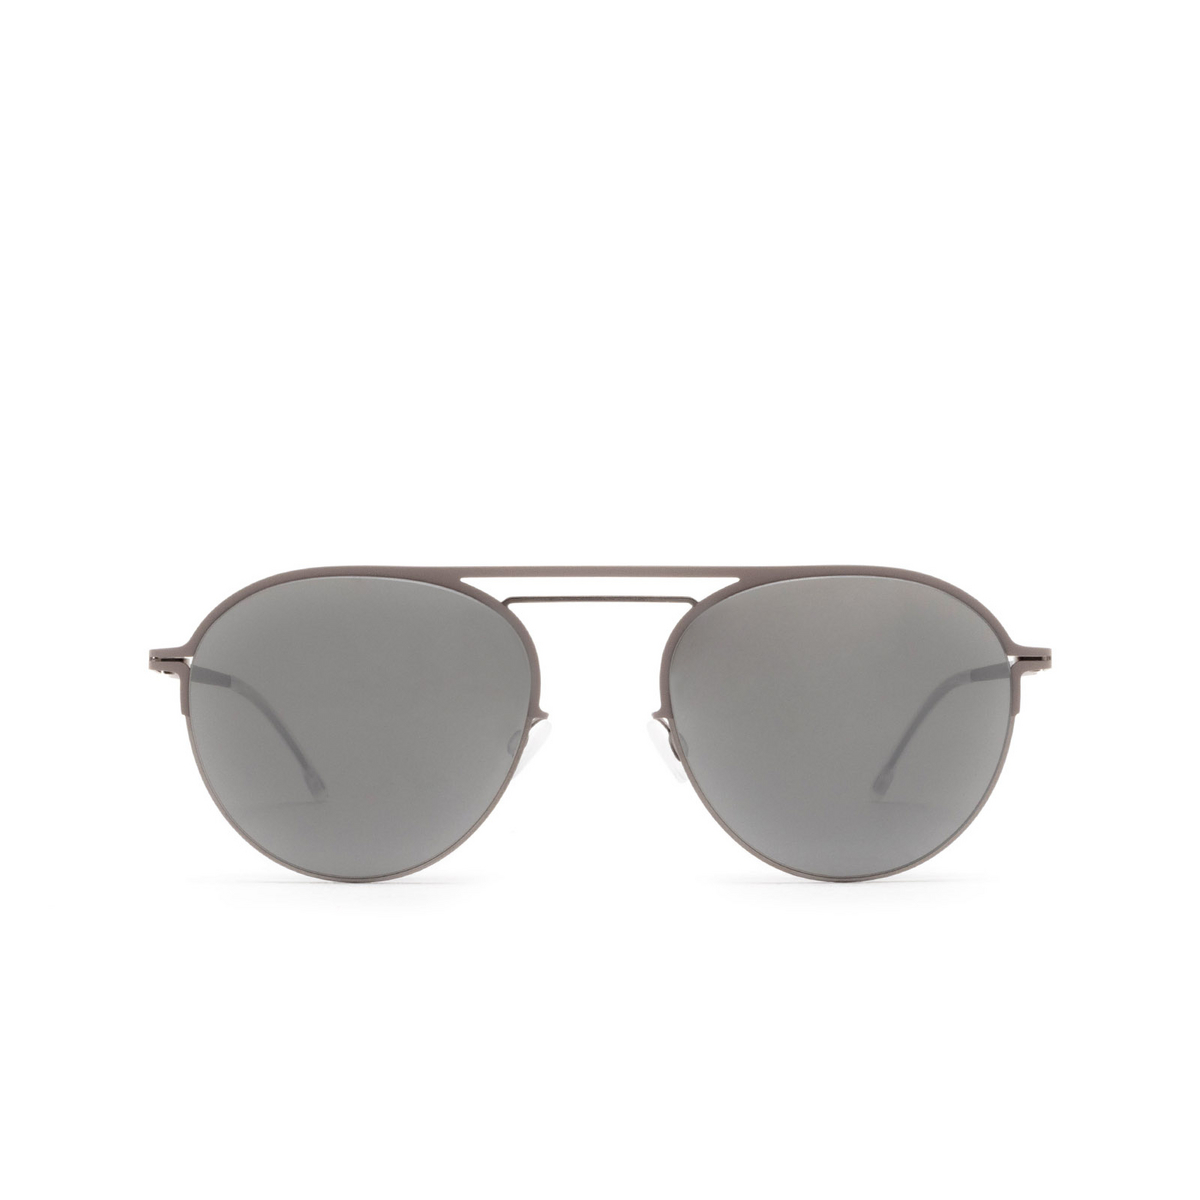 Mykita DUANE Sunglasses 235 Shiny Graphite/Mole Grey - front view